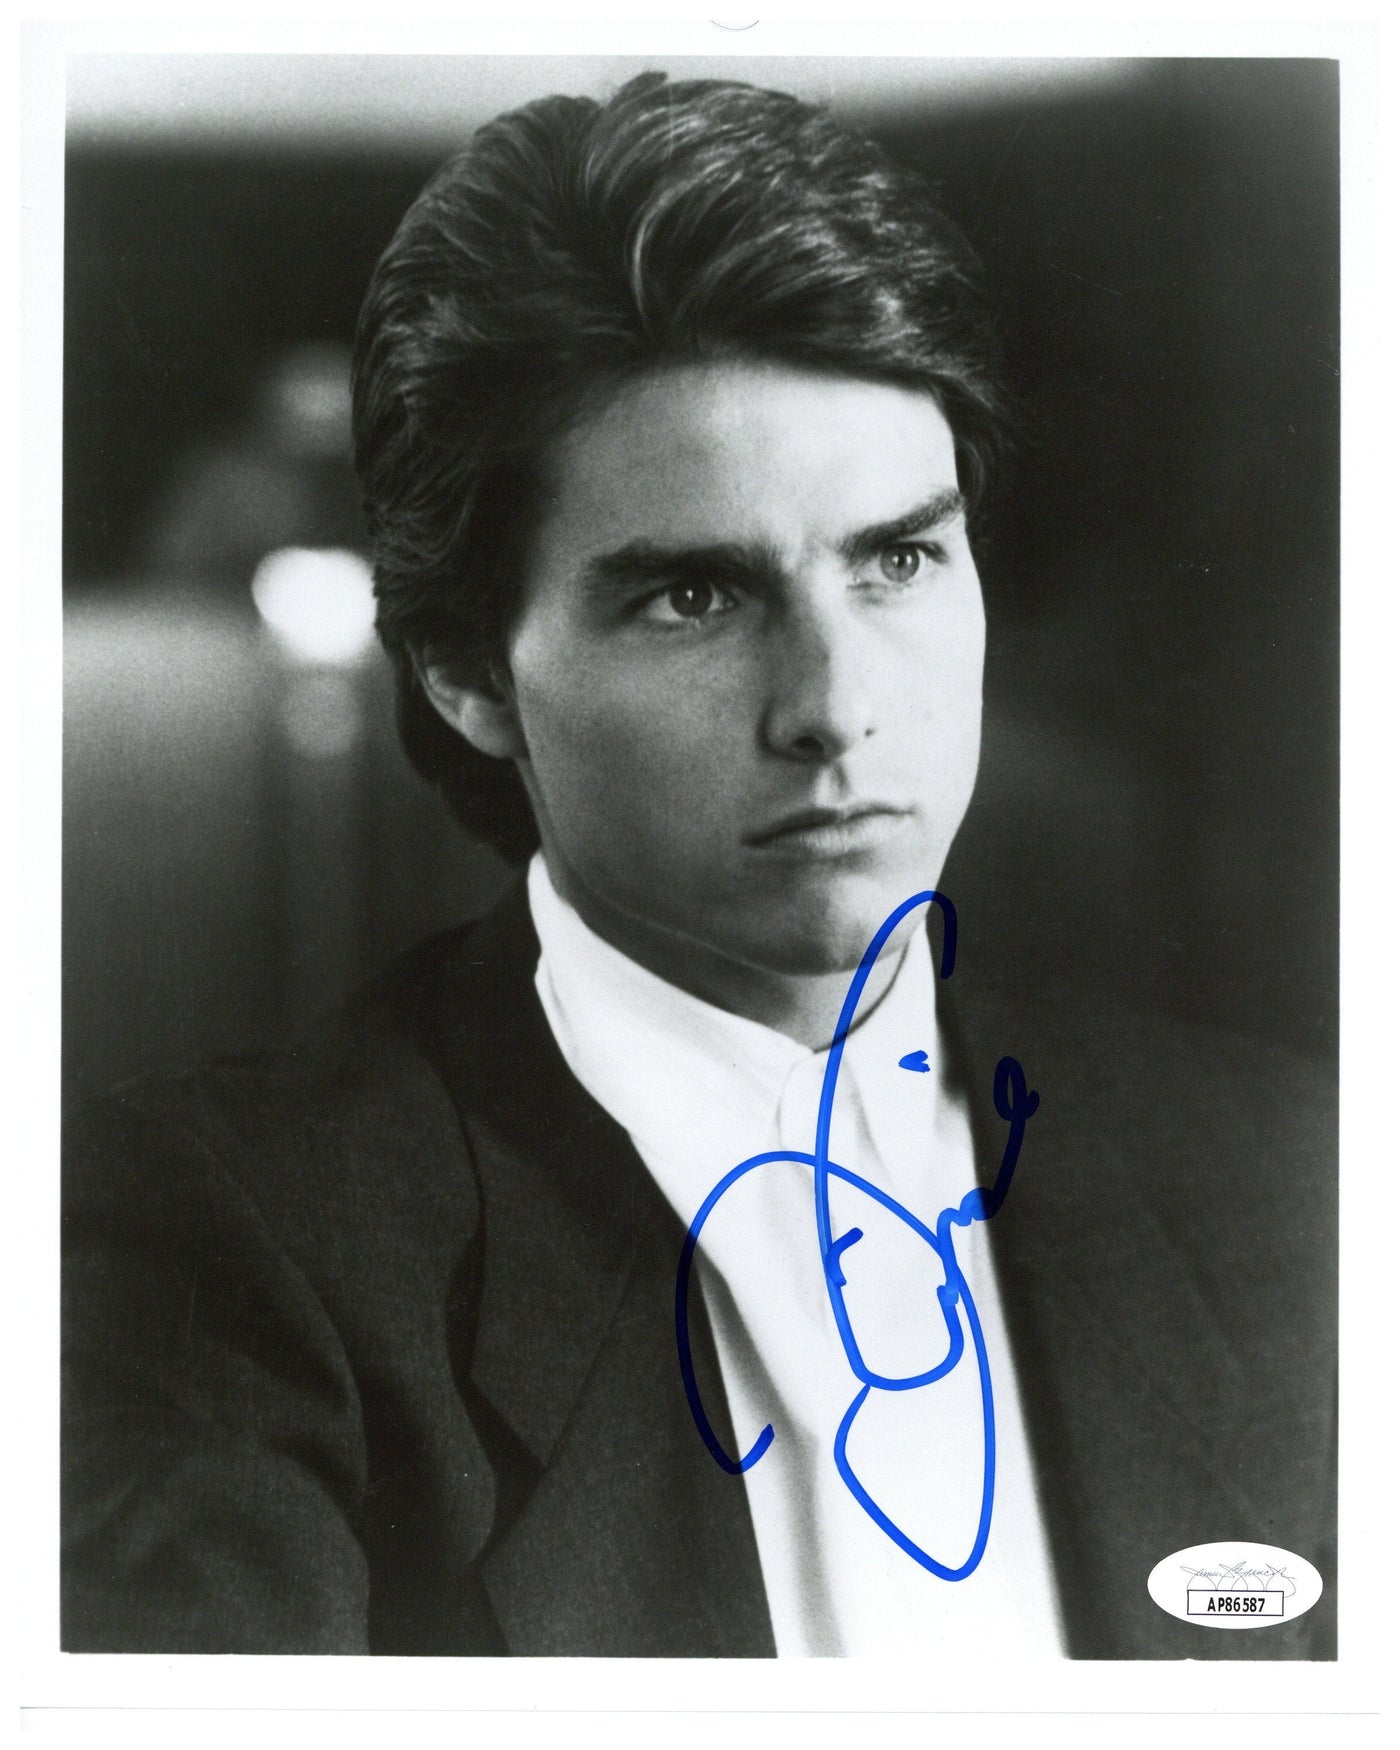 Tom Cruise Signed 8x10 Photo Rain Man Autographed JSA COA